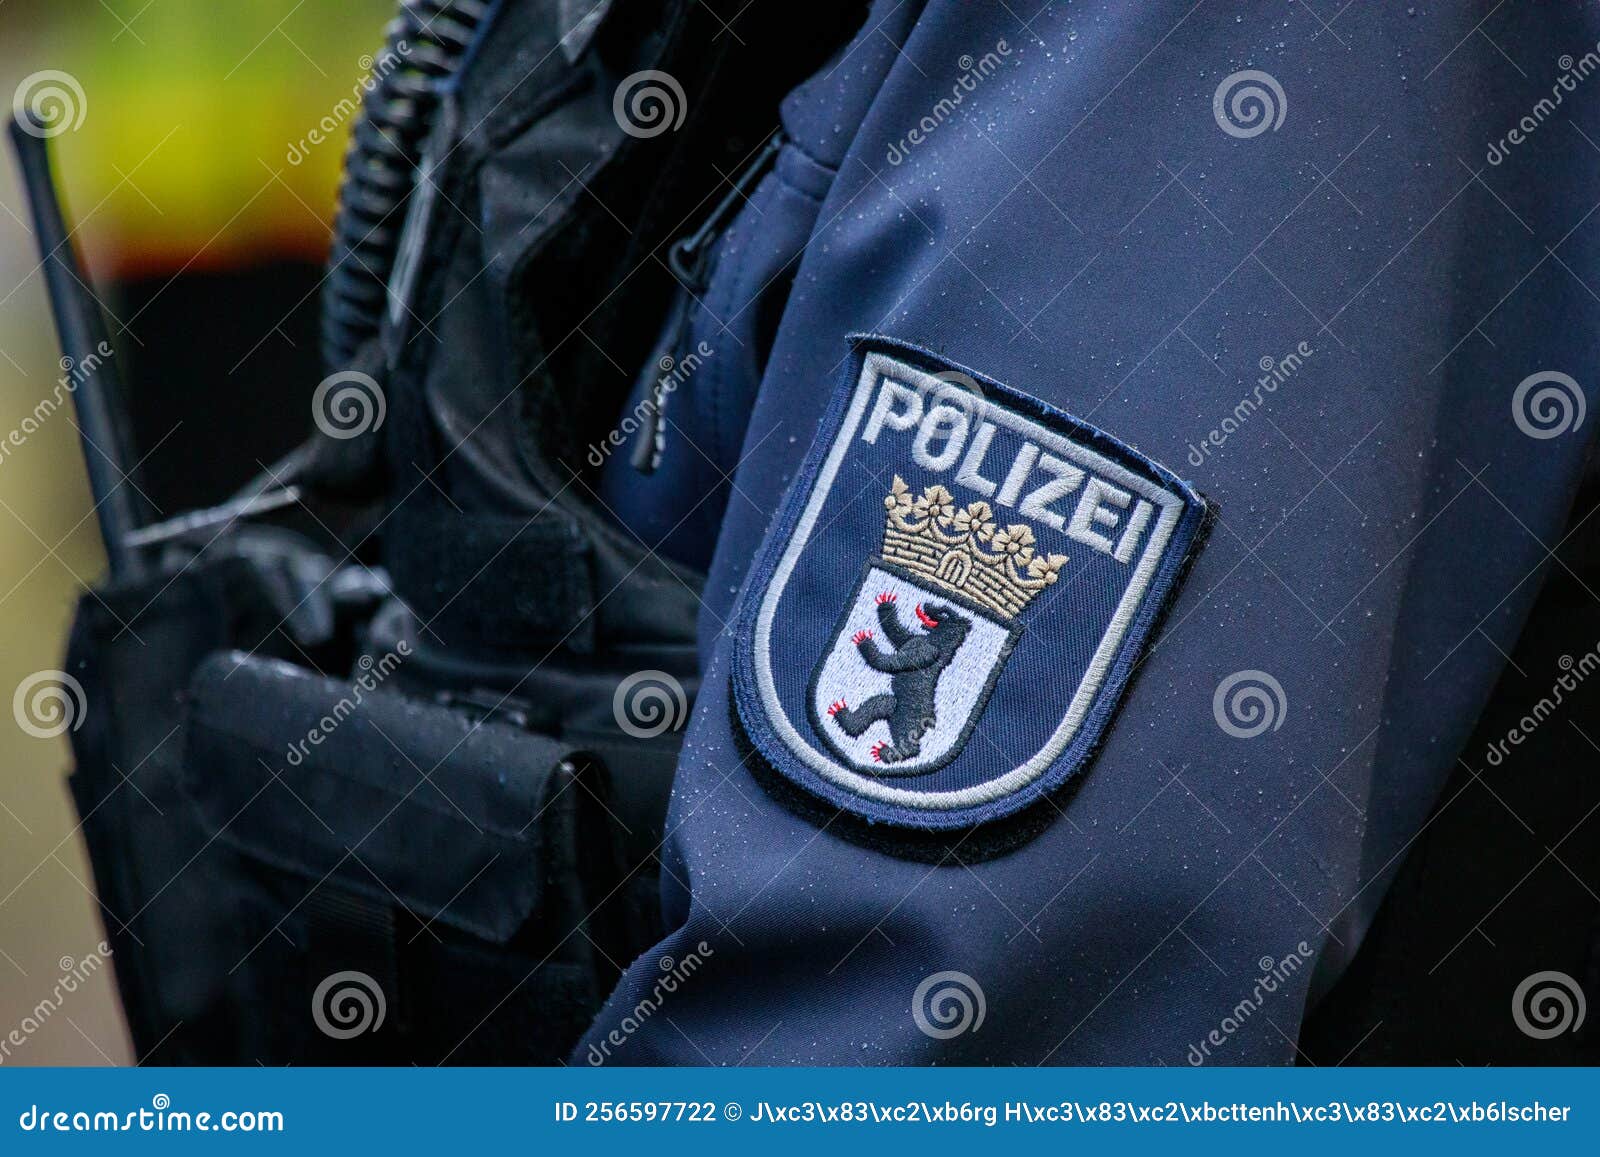 662 Polizei Berlin Stock Photos - Free & Royalty-Free Stock Photos